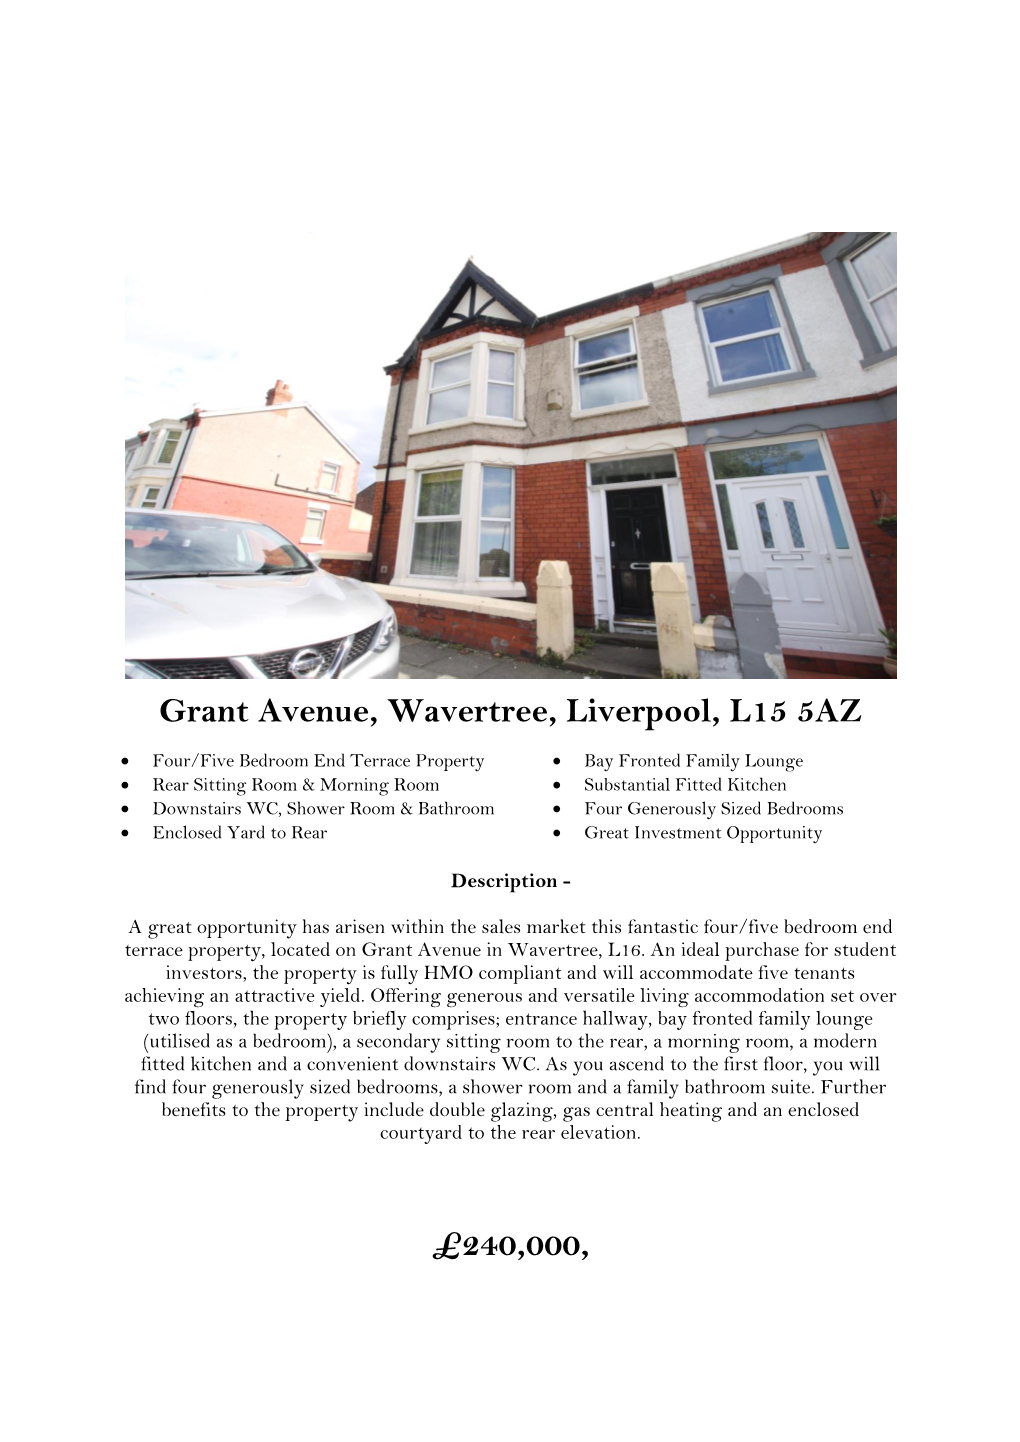 Grant Avenue, Wavertree, Liverpool, L15 5AZ £240,000